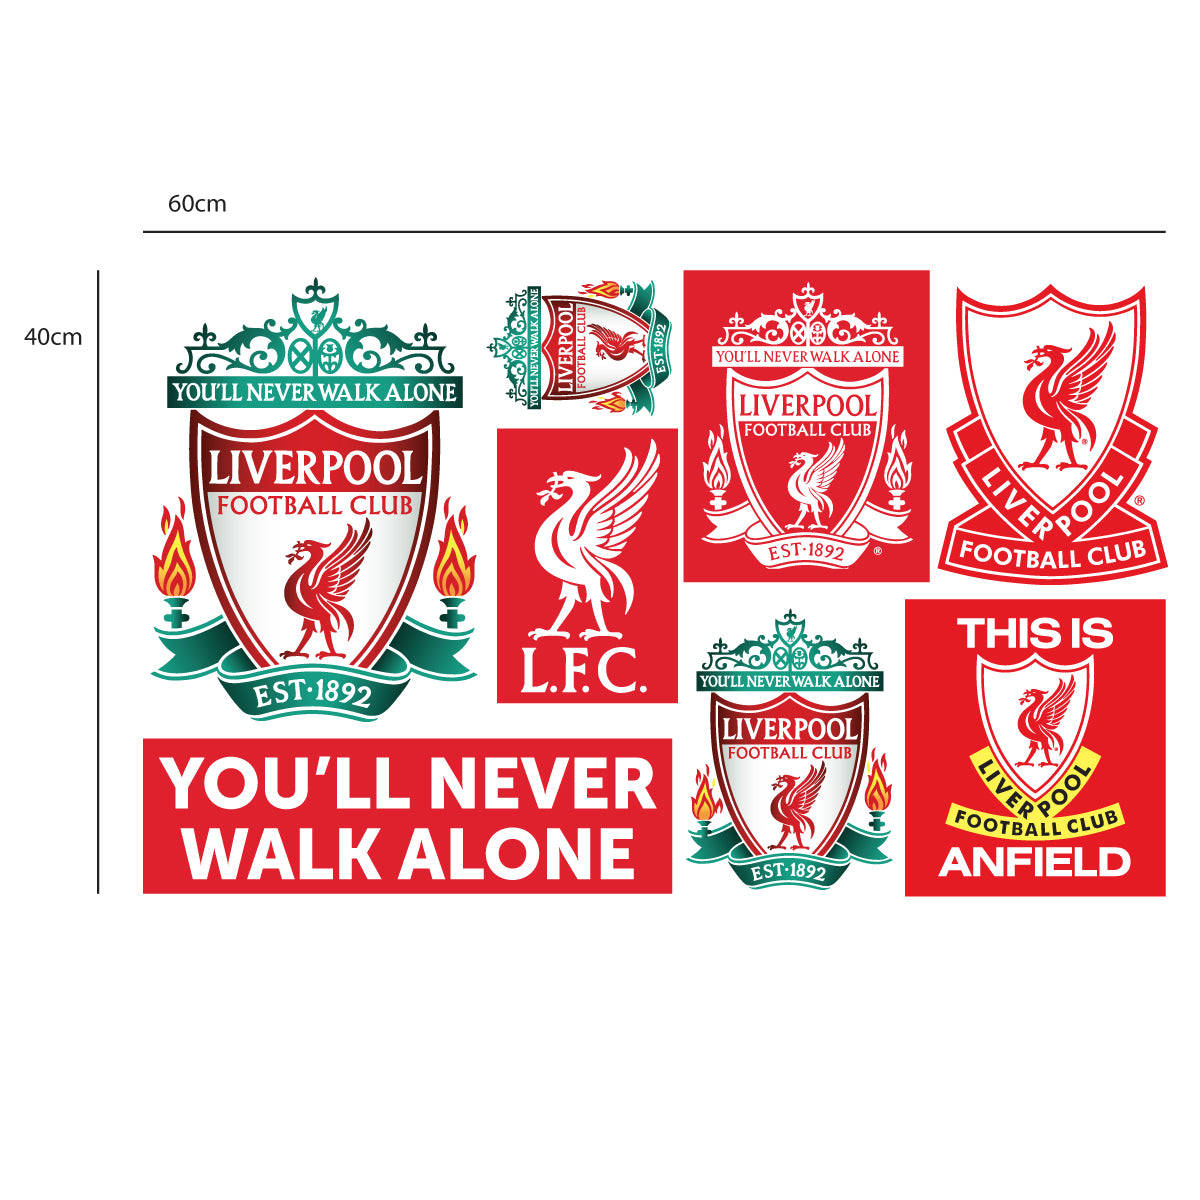 Liverpool Football Club - 'LFC' and Liver Bird Crest Wall Mural + LFC Wall Sticker Set